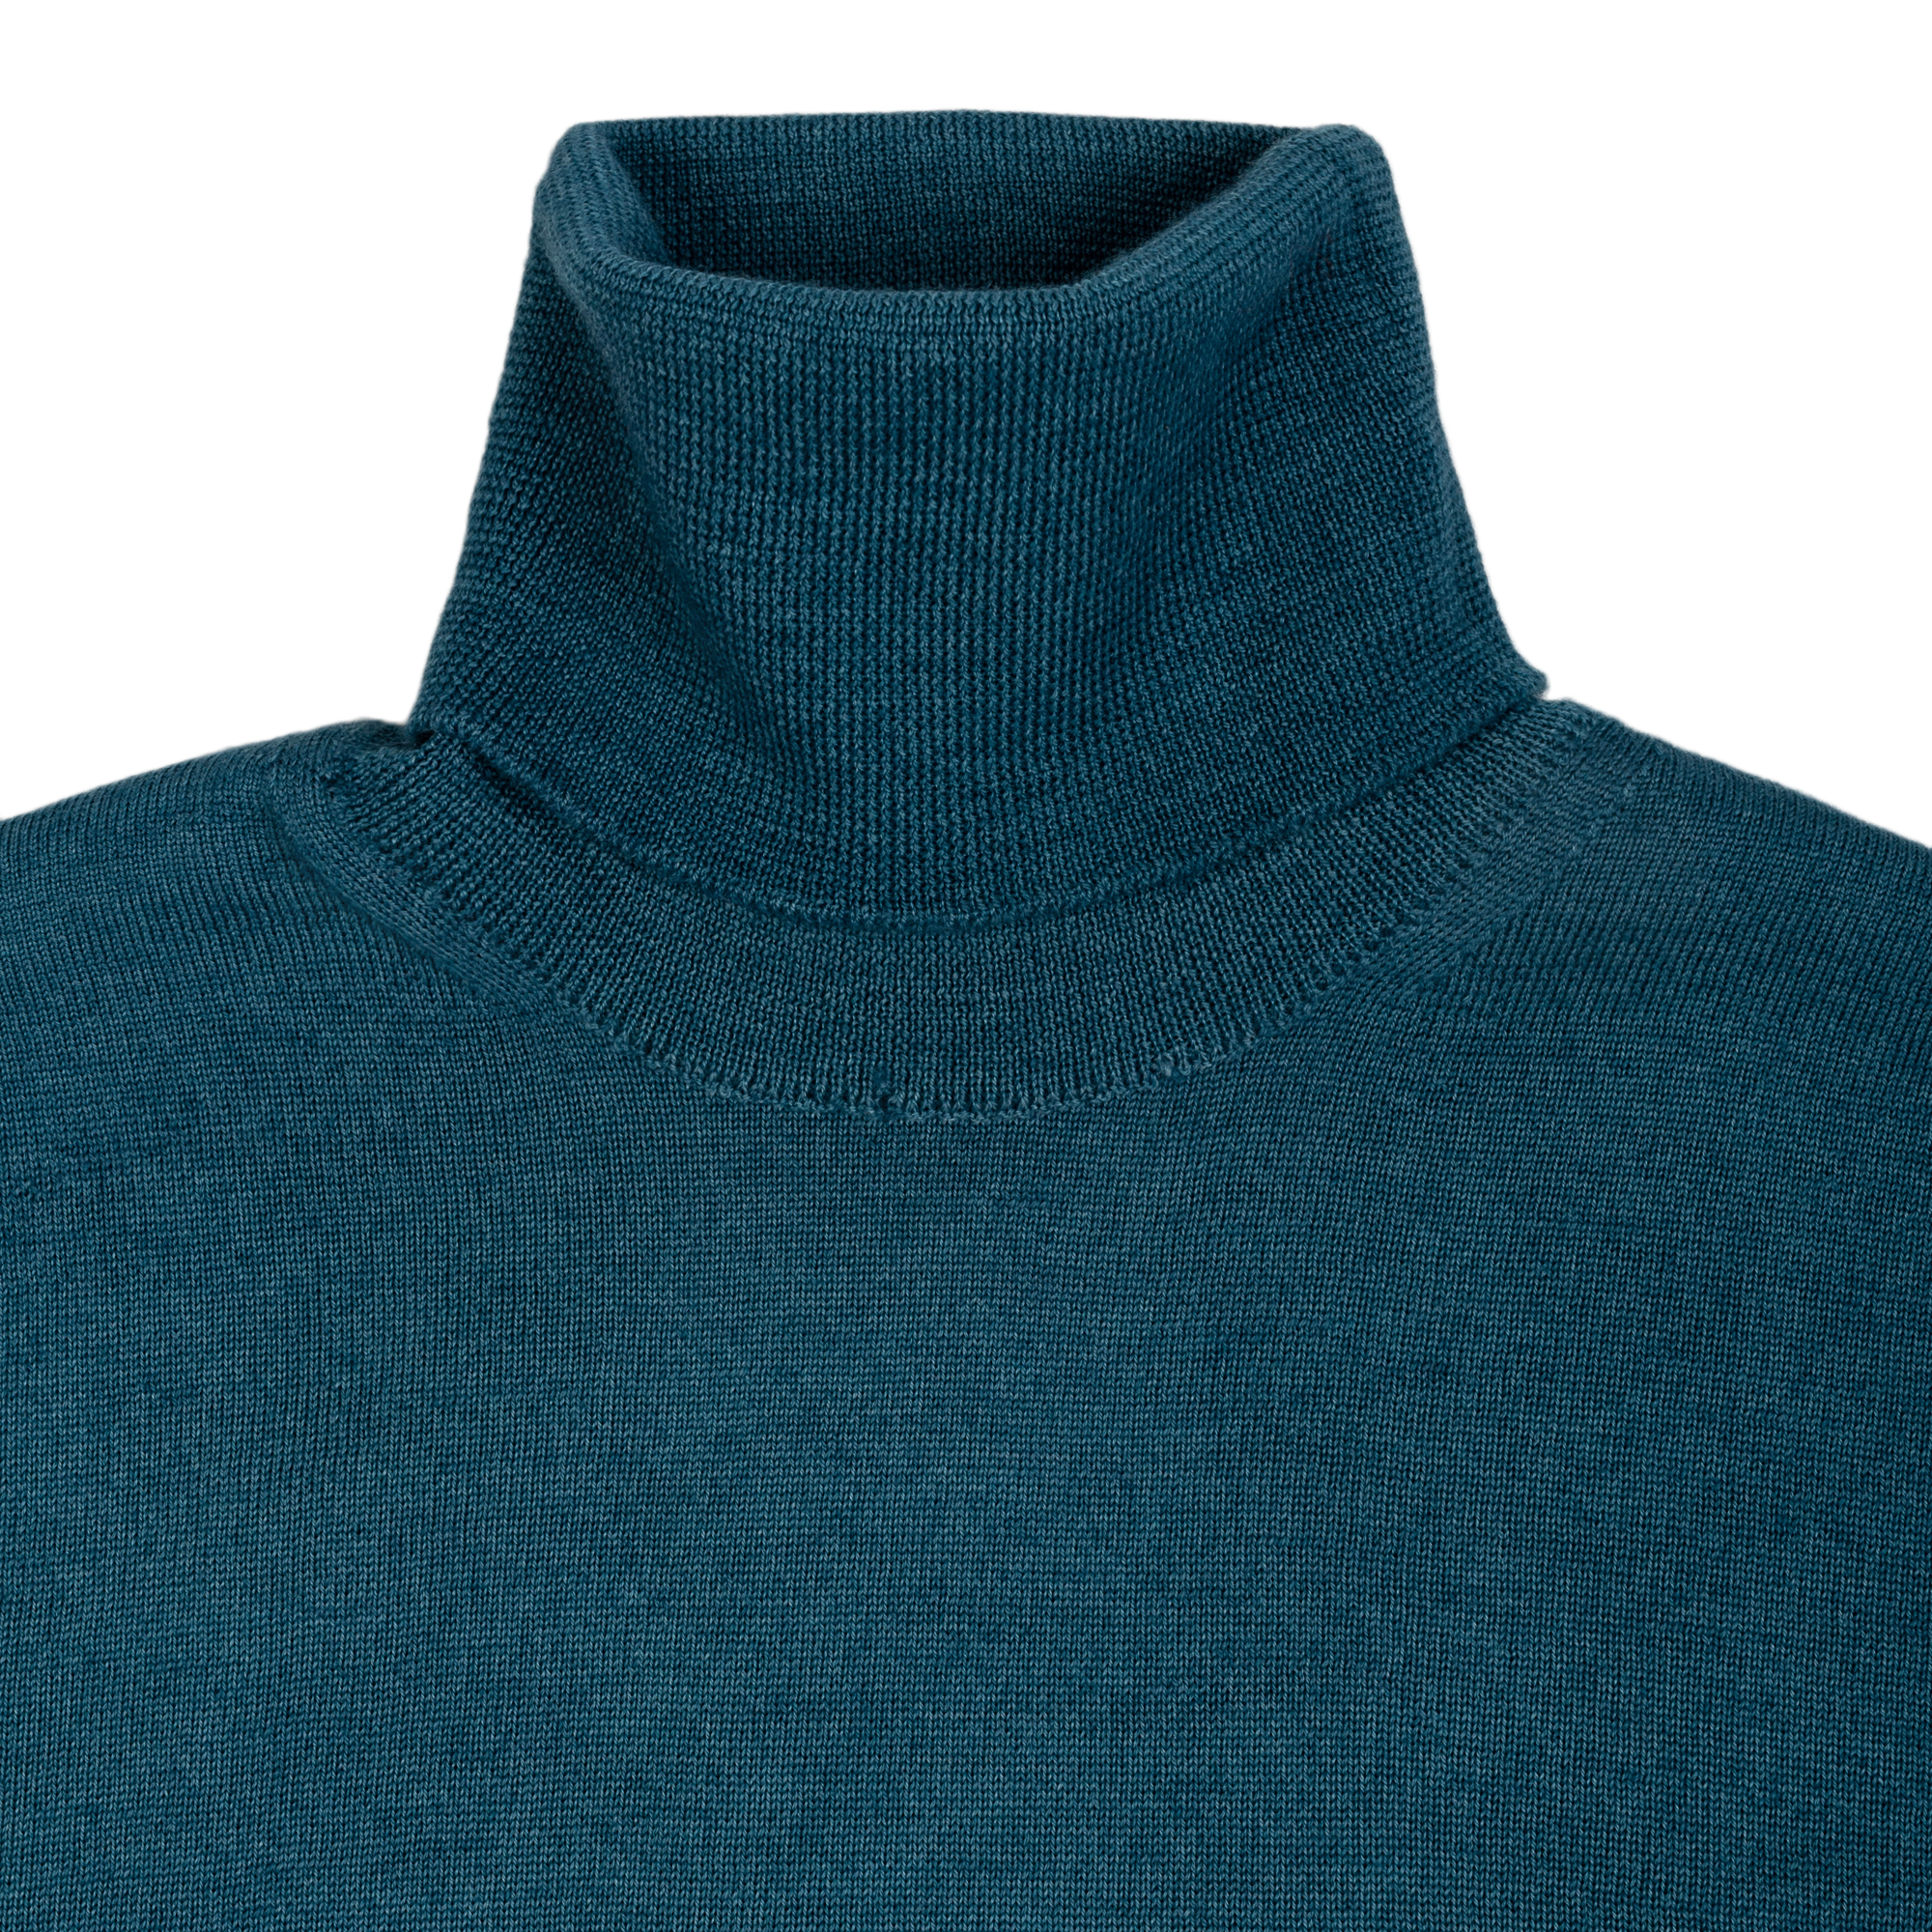 Men's Turquoise Turtleneck Sweater